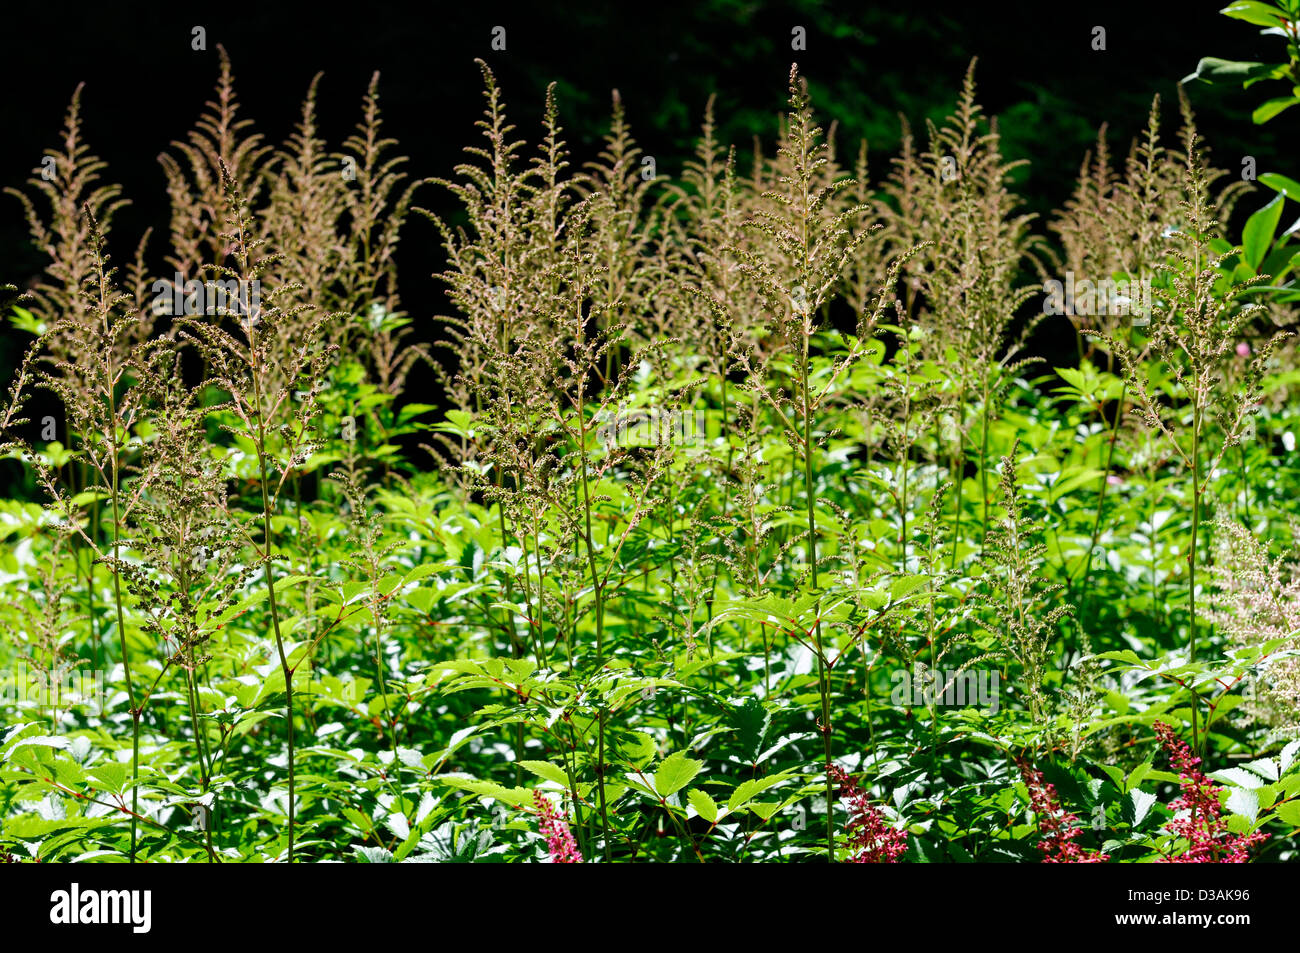 Astilbe flauschige gefiederten Stauden Pflanzen Porträts Closeup Blumen Blüte Blüte Stockfoto